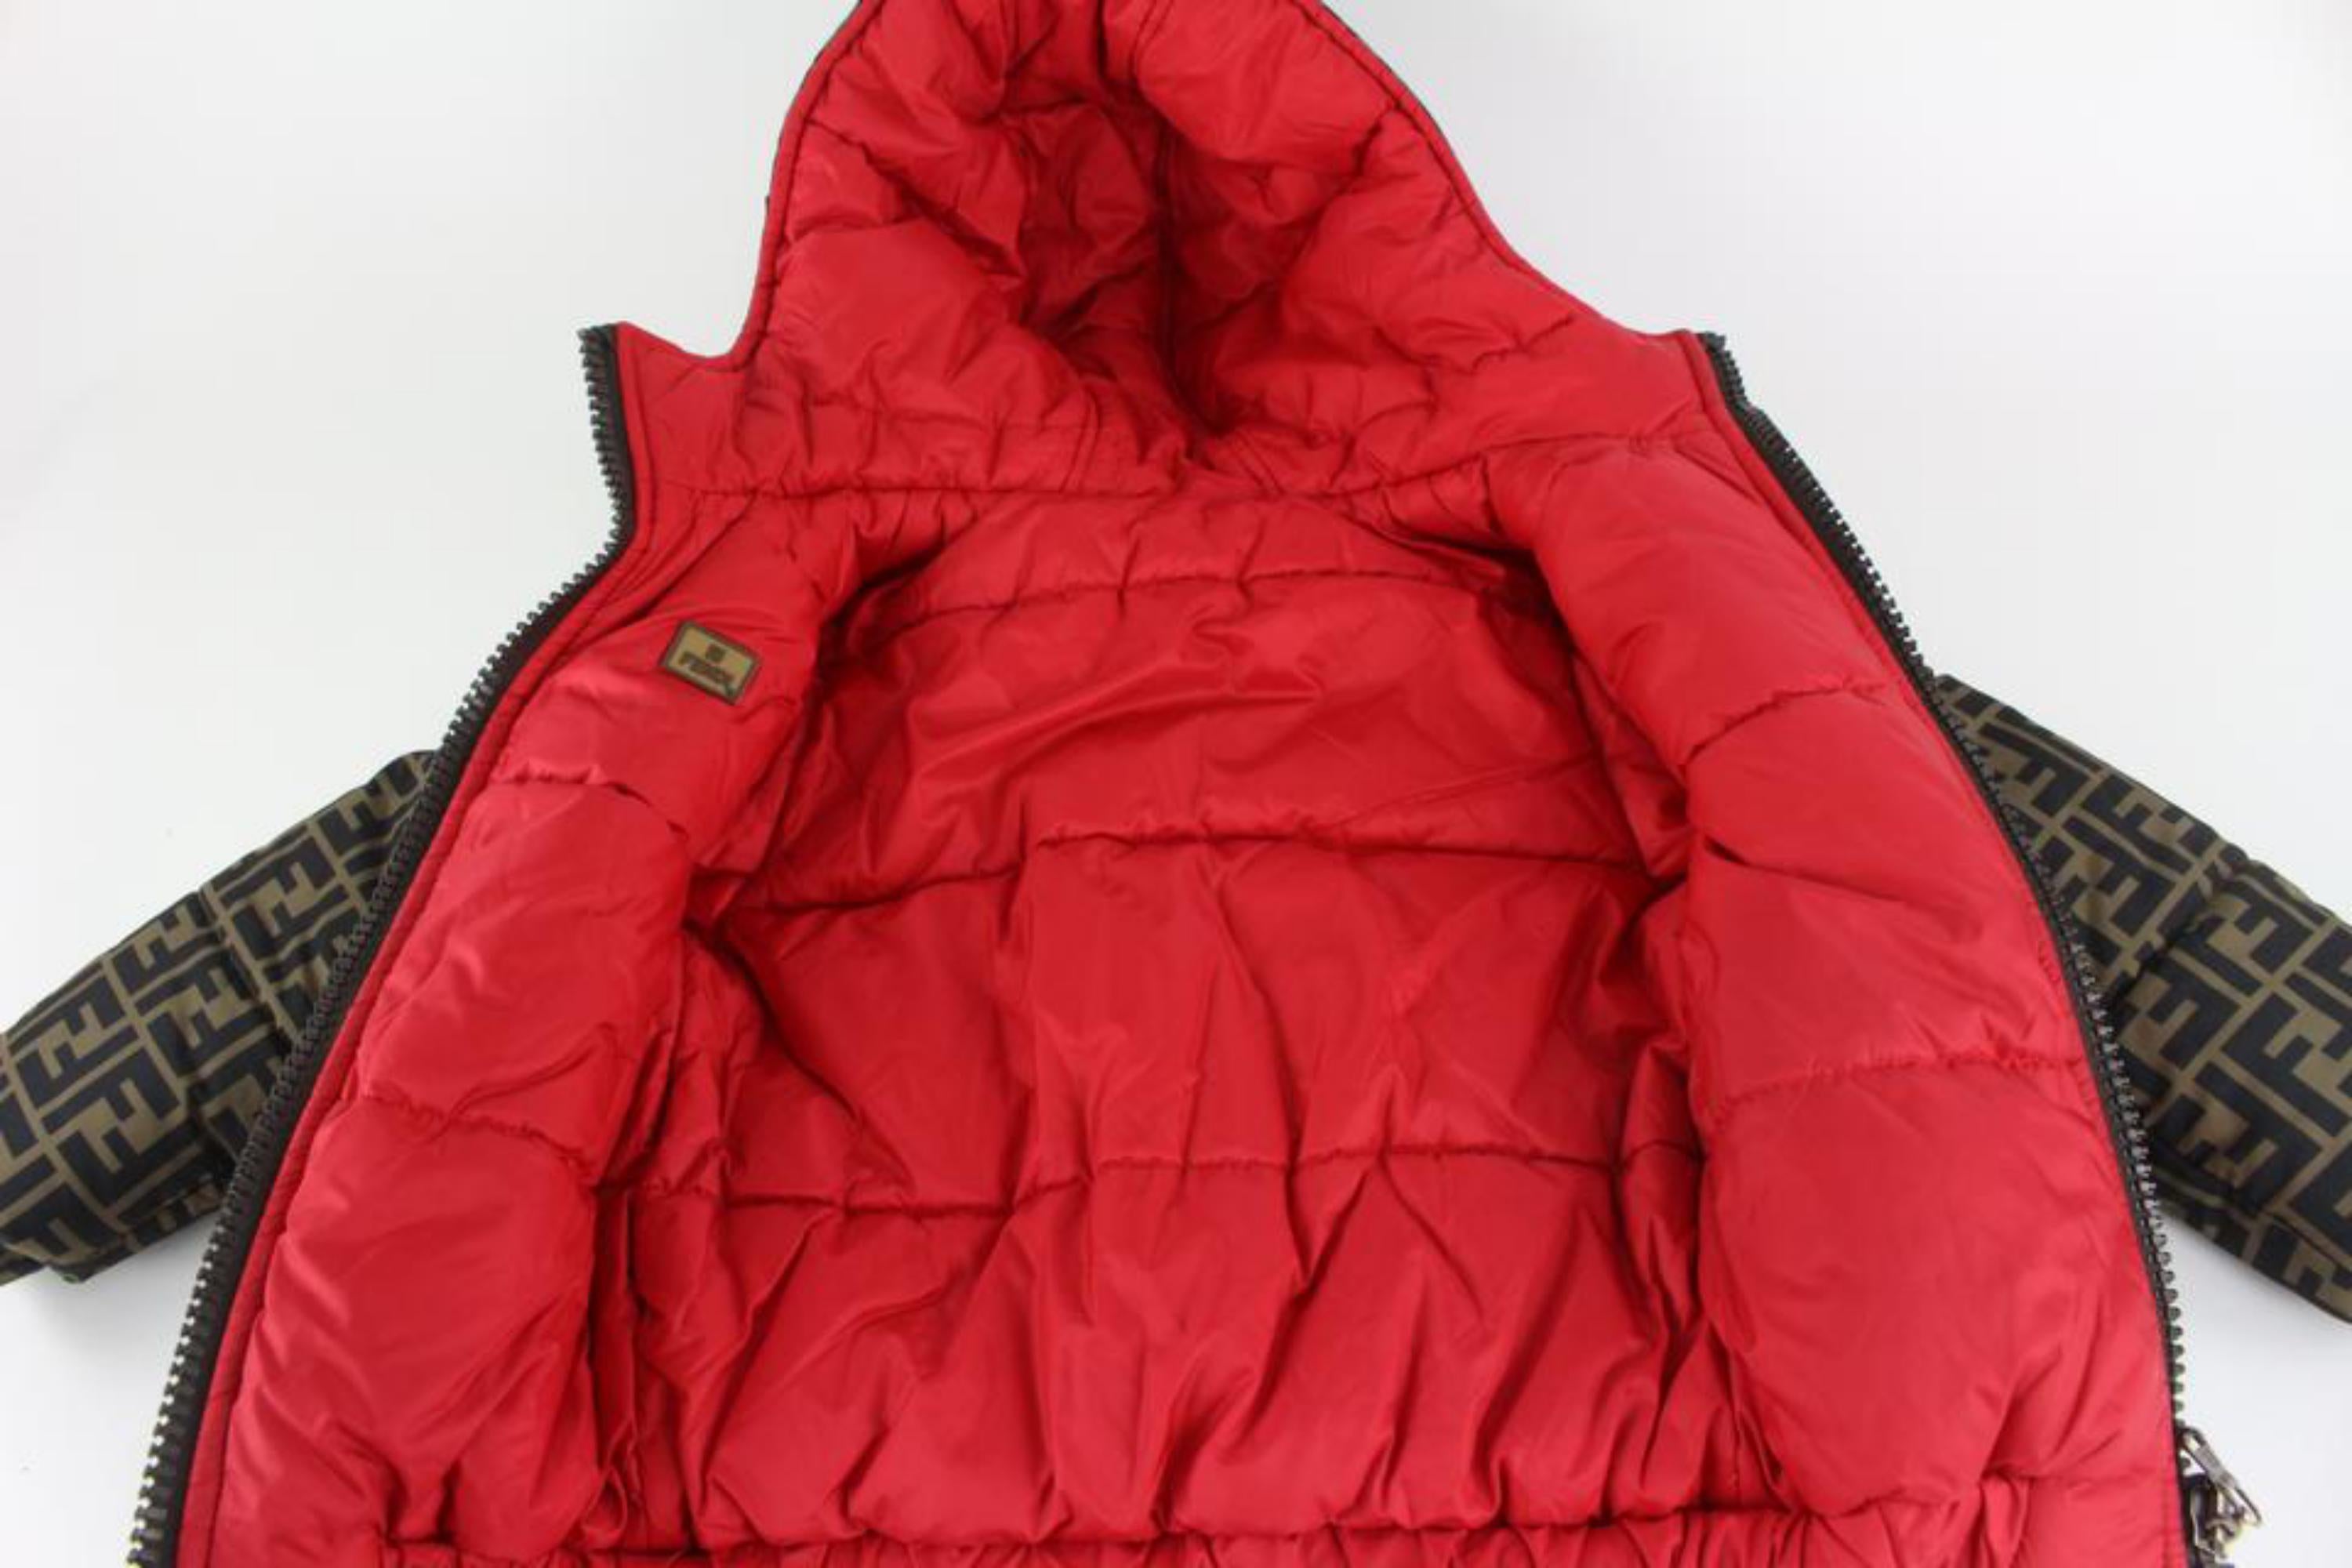 Fendi Toddler Size 3T Monogram x Red Puffer Coat Puffy Jacket Toddler 0FF22 4